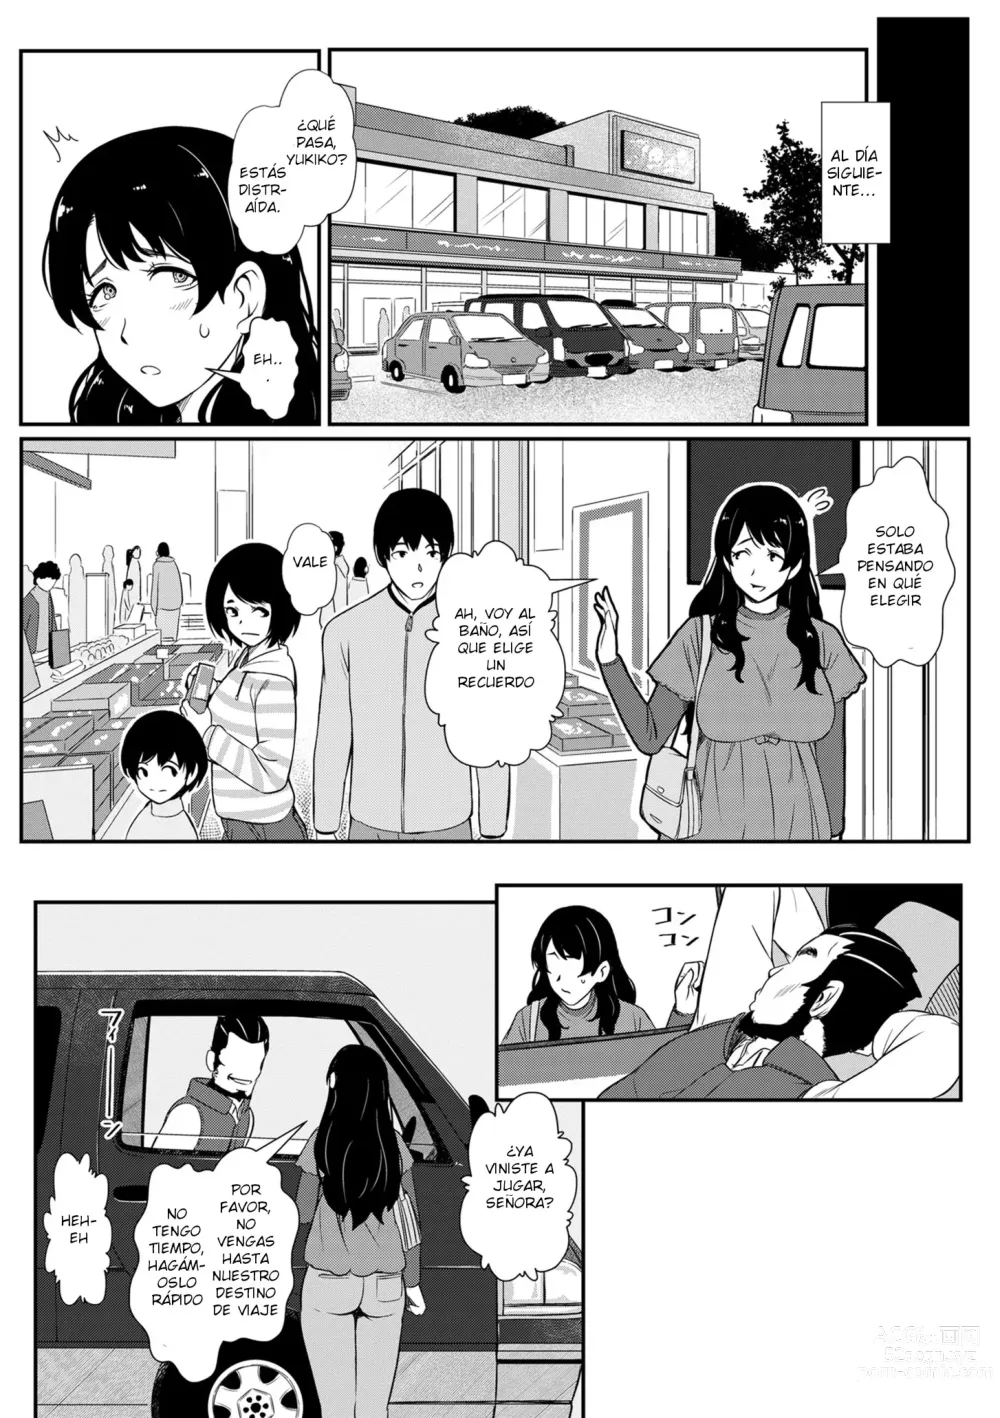 Page 12 of manga Haha wa tabi no owari ni...